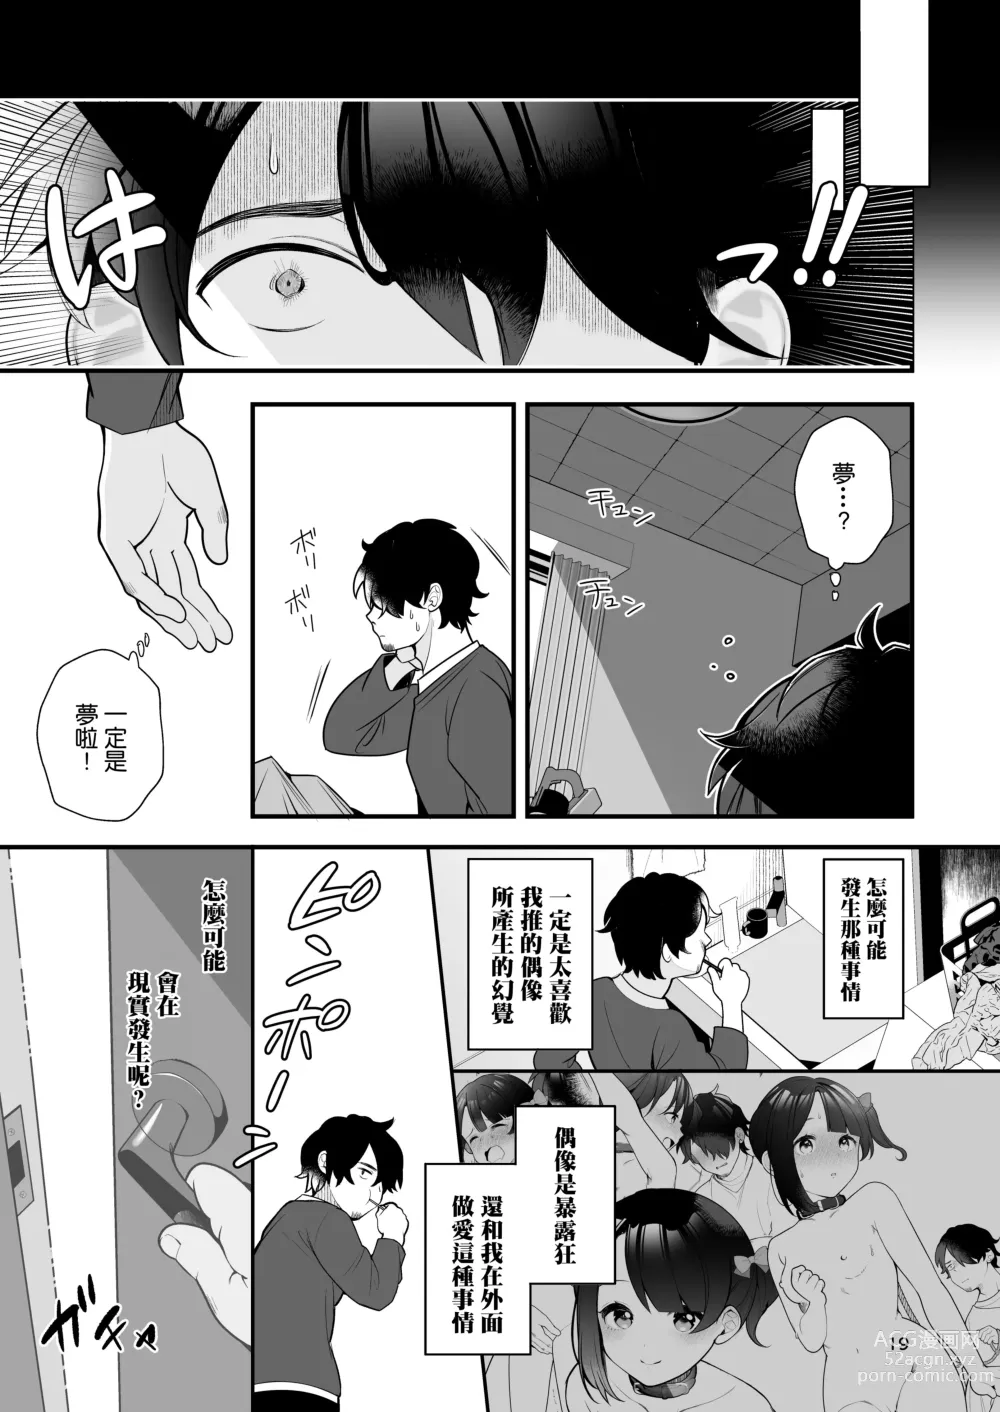 Page 22 of doujinshi 關於我推的偶像是暴露狂這件事